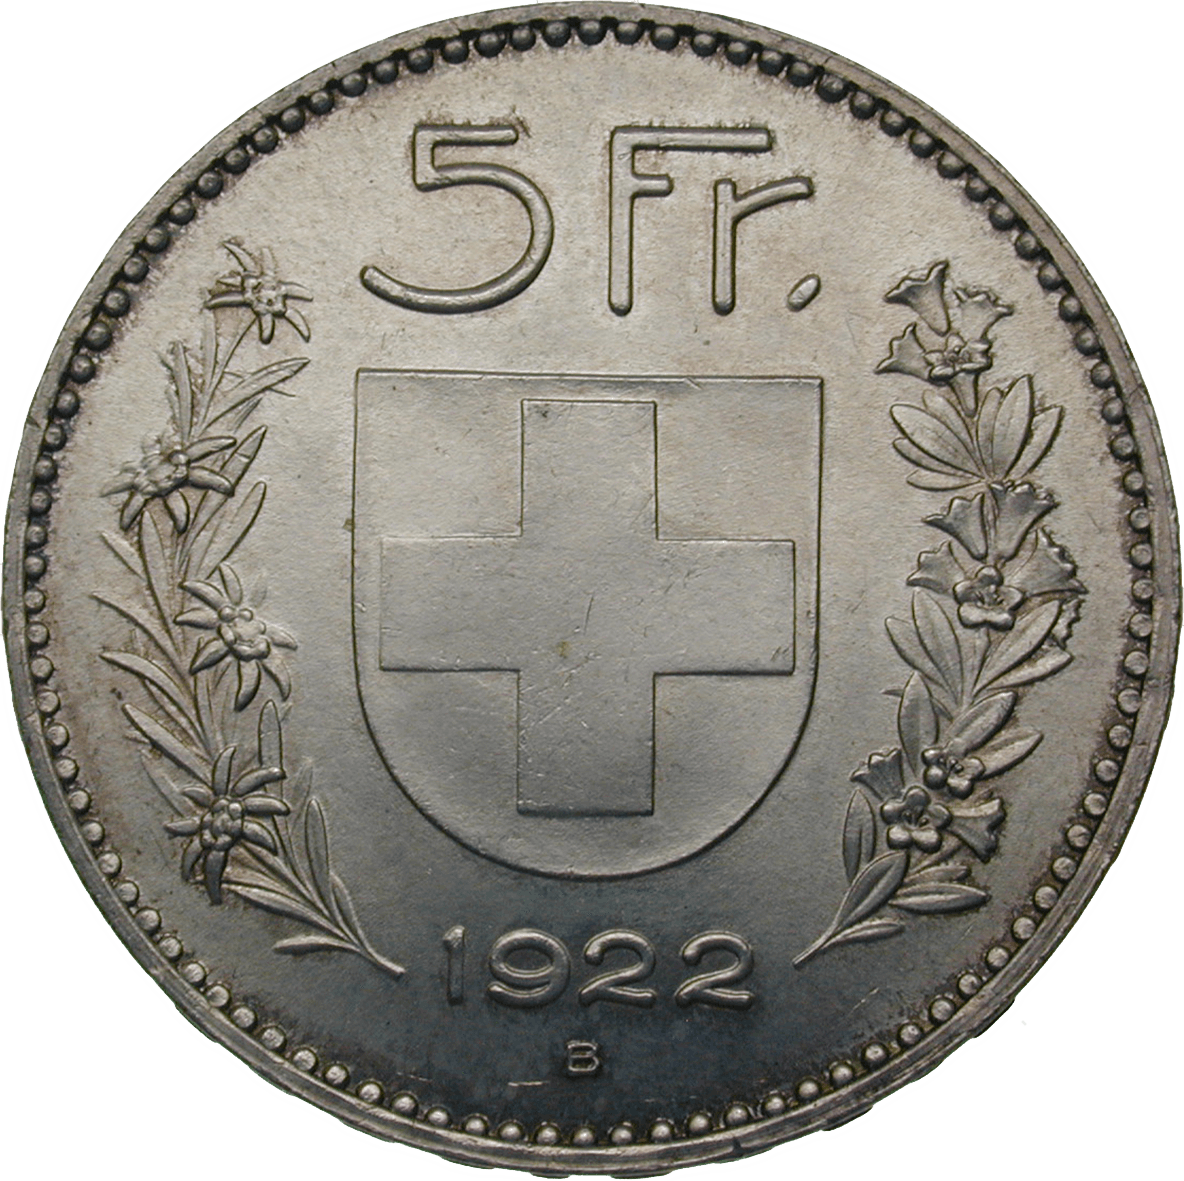 Swiss Confederation, 5 Francs 1922 (reverse)